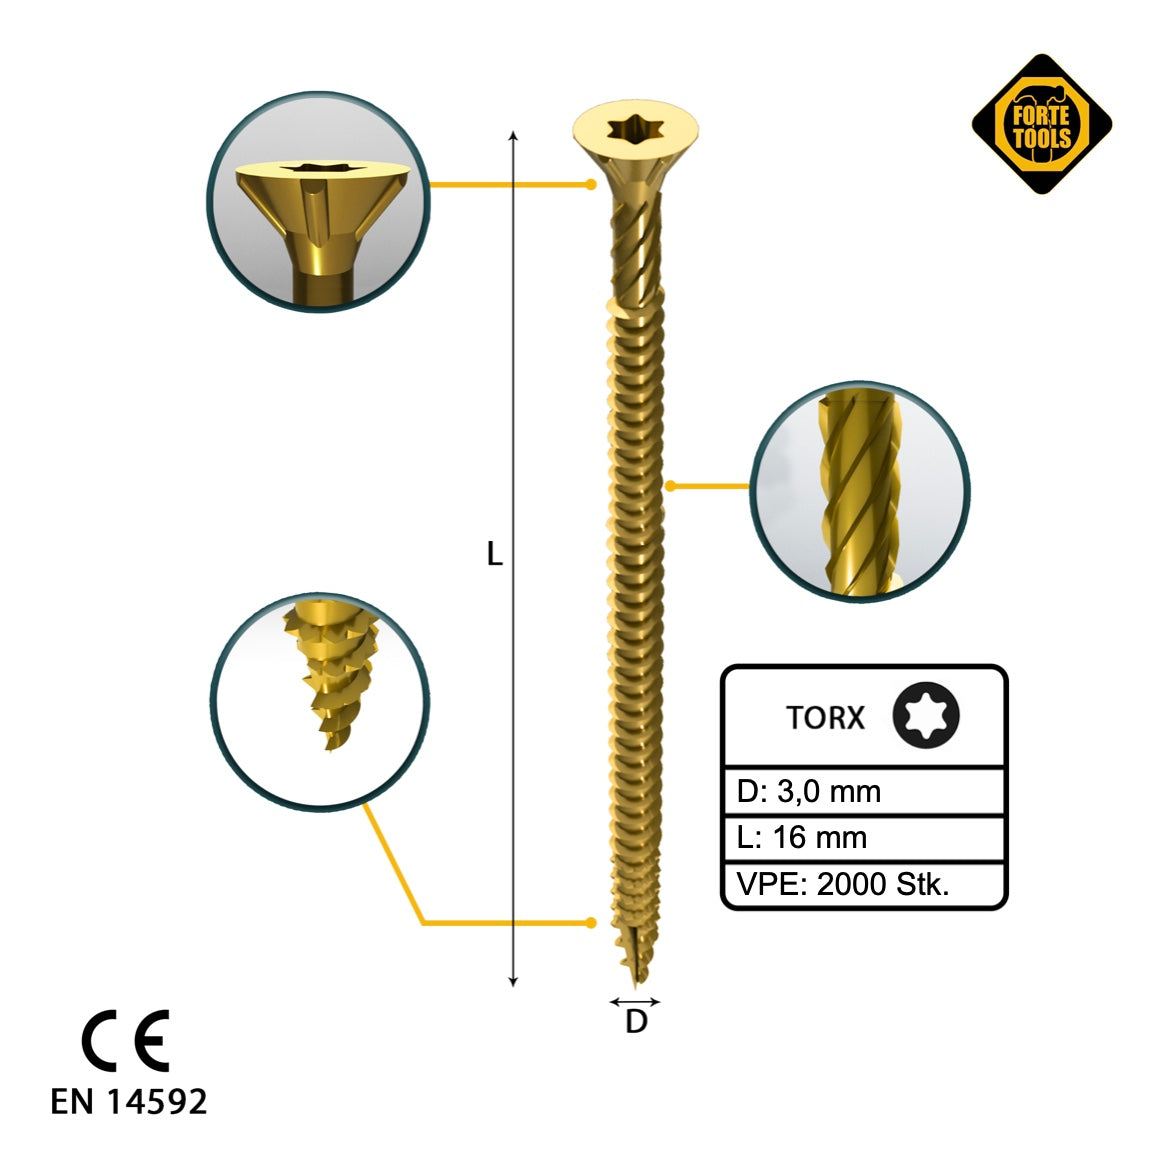 FORTE Tools Universal Holzschraube 3,0 x 16 mm T10 2000 Stk. ( 4x 000051399461 ) gelb verzinkt Torx Senkkopf Vollgewinde - Toolbrothers